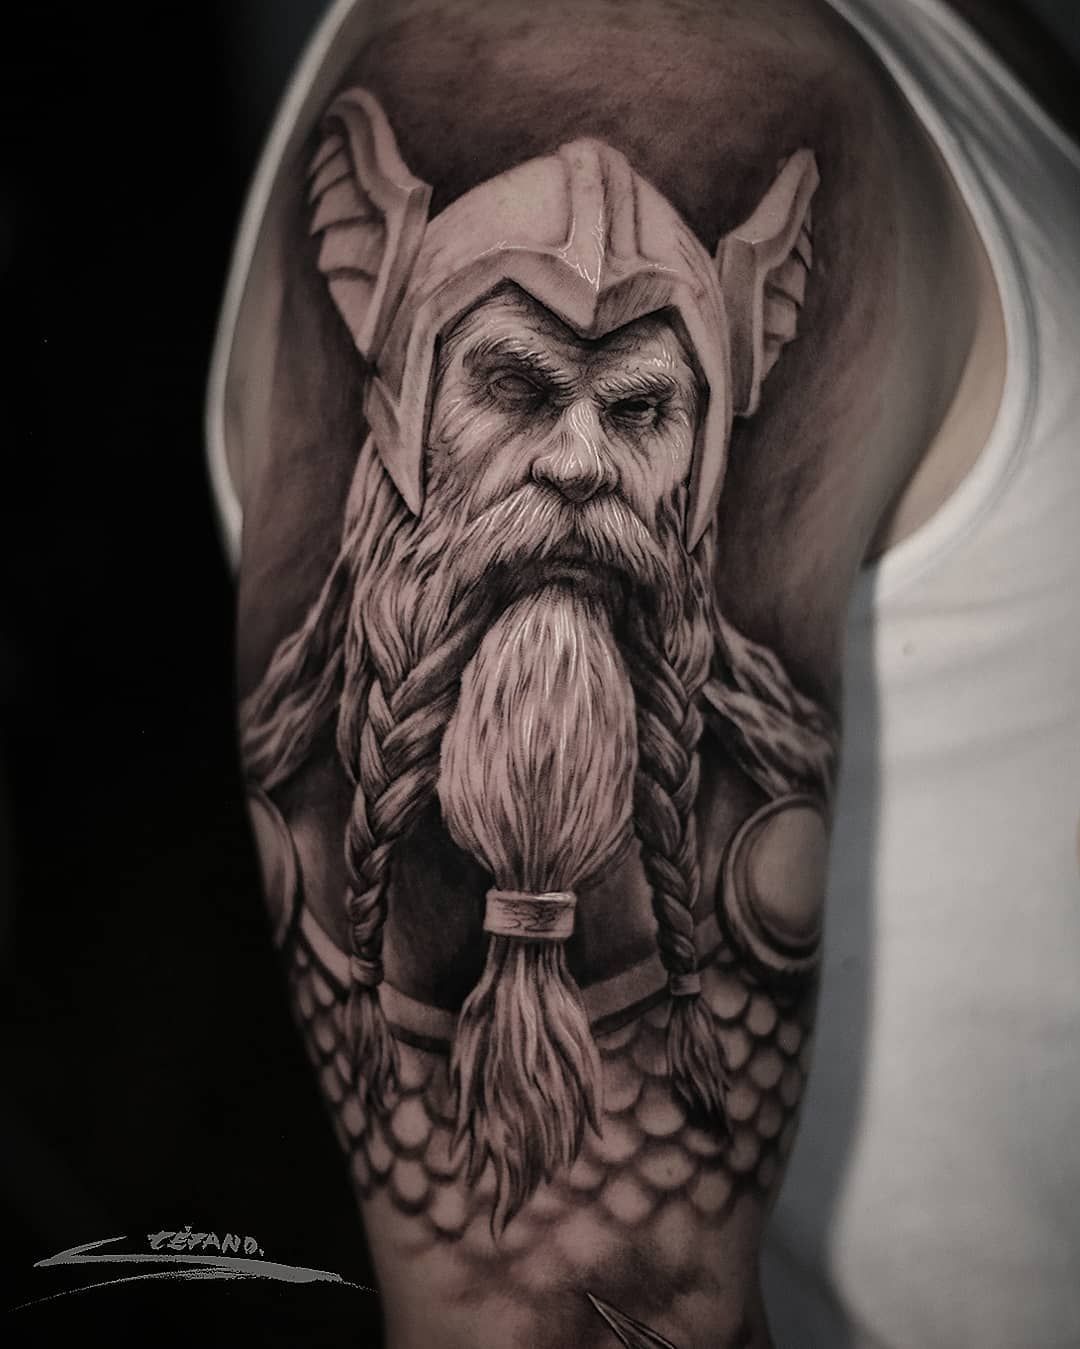 101 Amazing Odin Tattoo Ideas That Will Blow Your Mind  Mythology tattoos  Viking tattoos Traditional viking tattoos